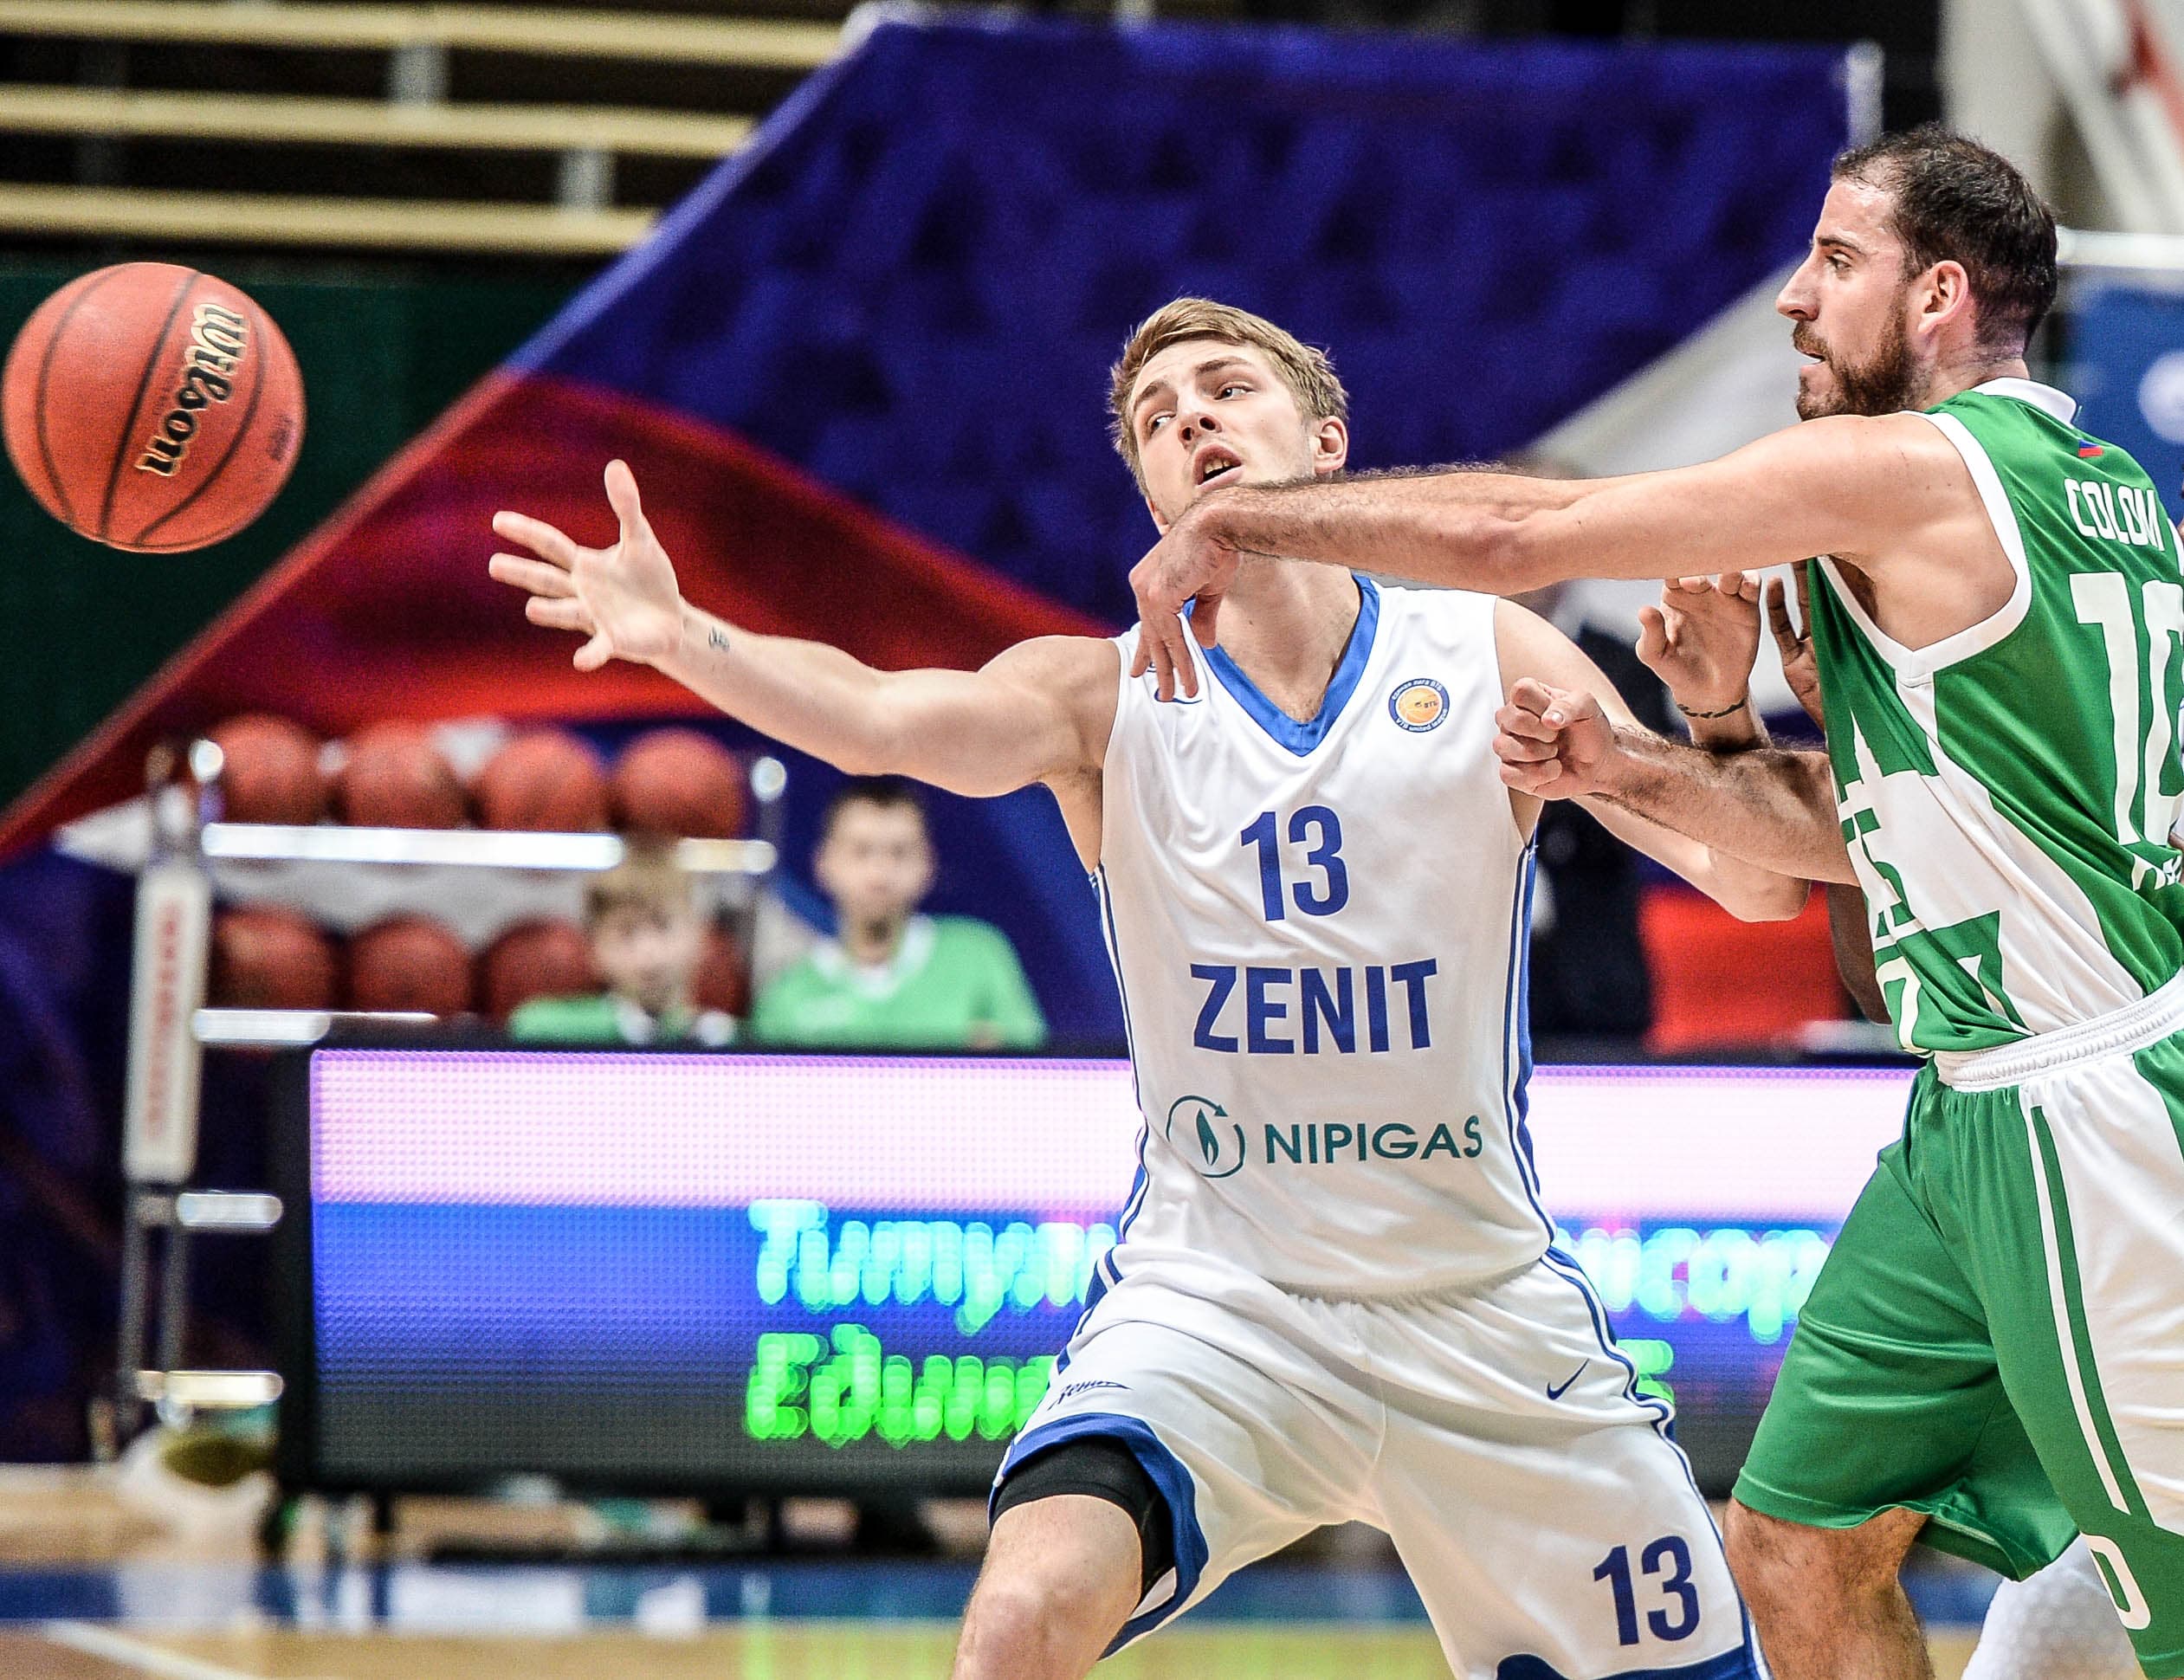 Game Of The Week: UNICS vs. Zenit